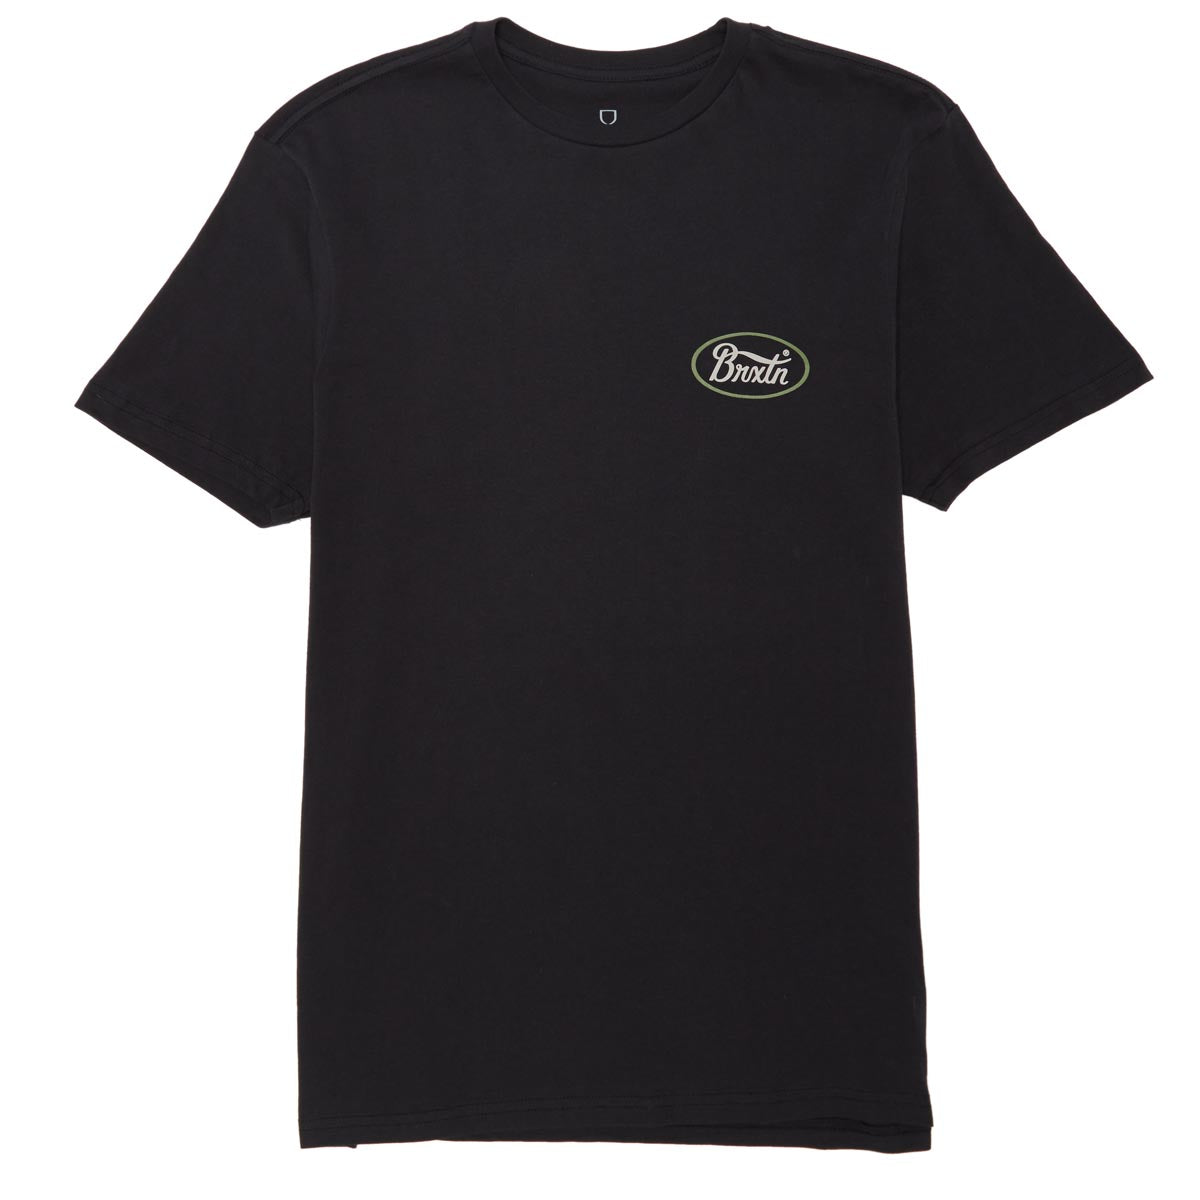 Brixton Parsons T-Shirt - Black/Bone/Sea Kelp image 2